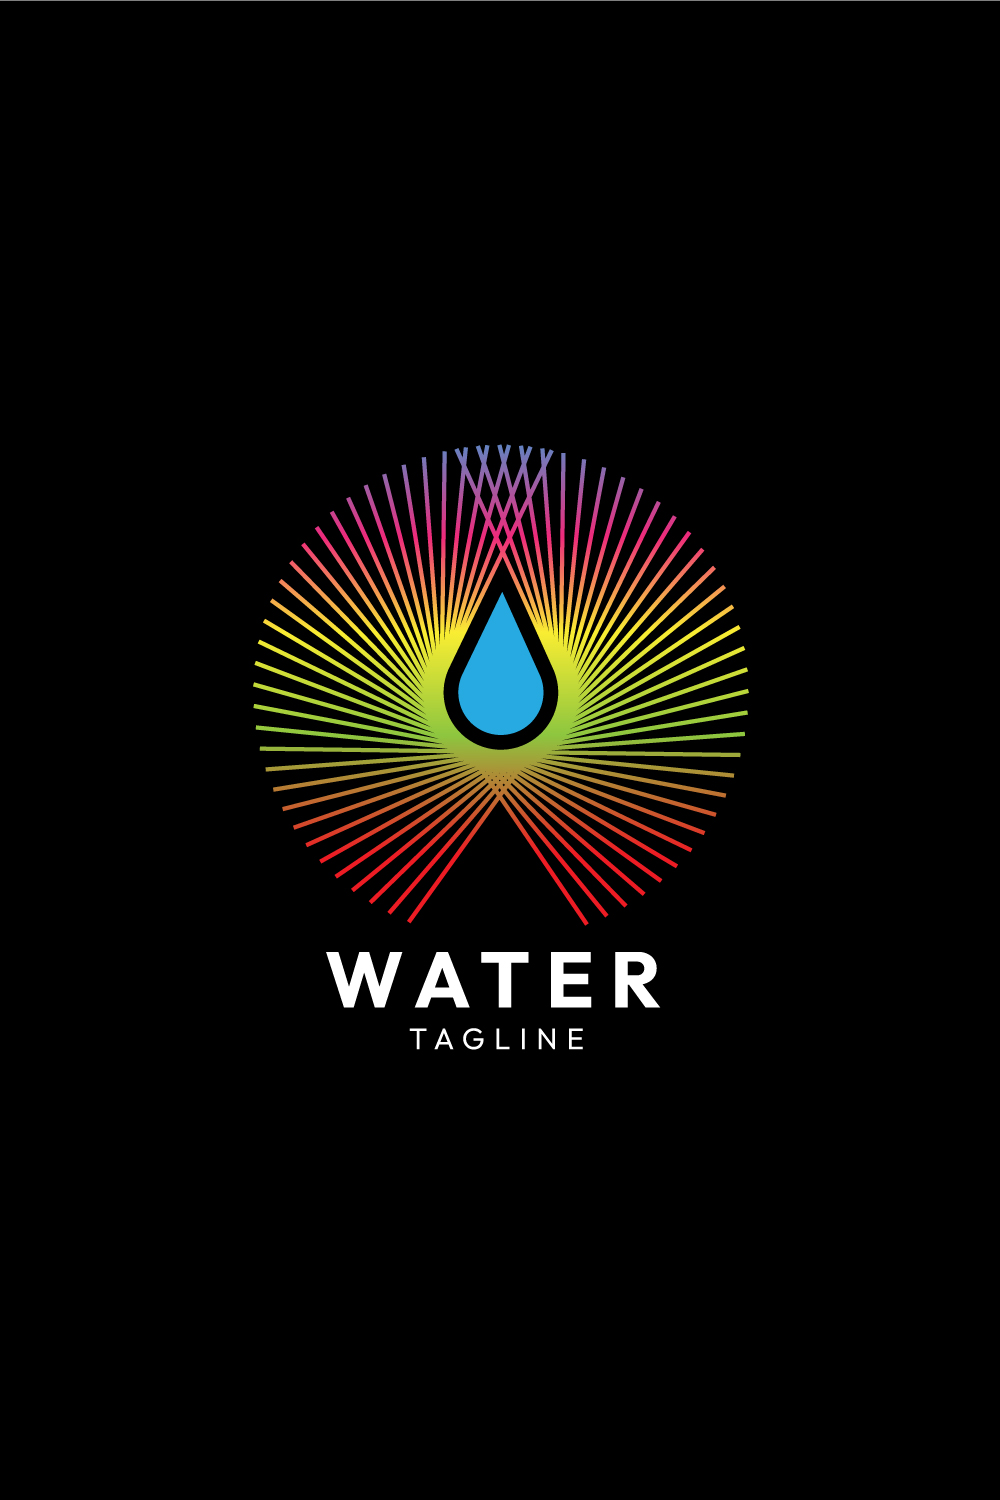 Unique Water Line Art Logo Design - Perfect for Master Bundles pinterest preview image.